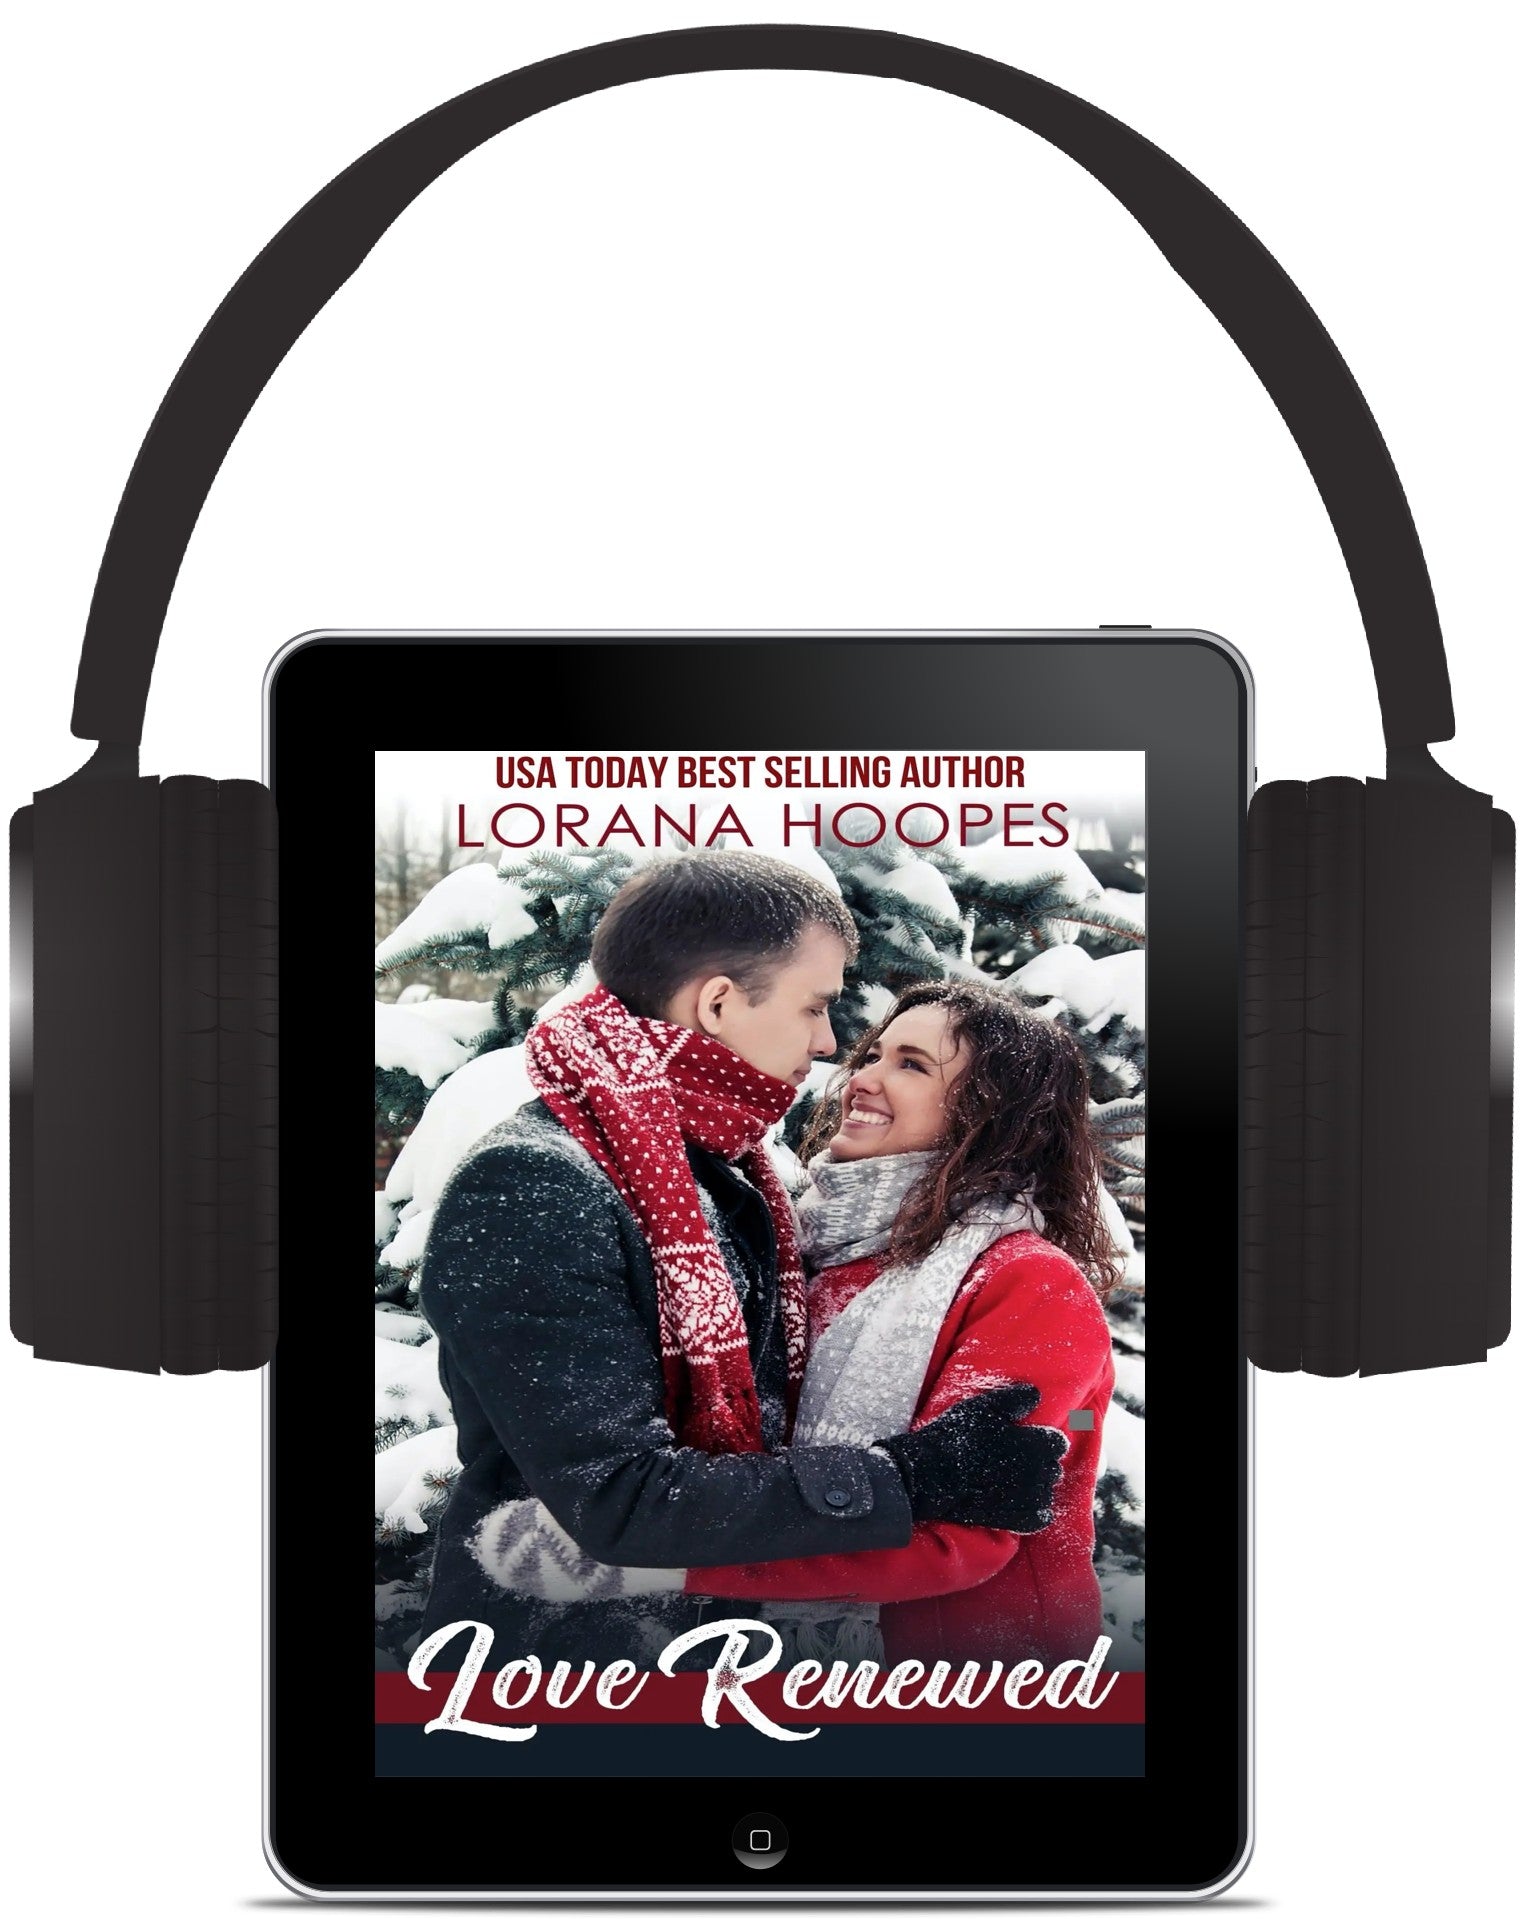 Love Renewed Audiobook - Author Lorana Hoopes